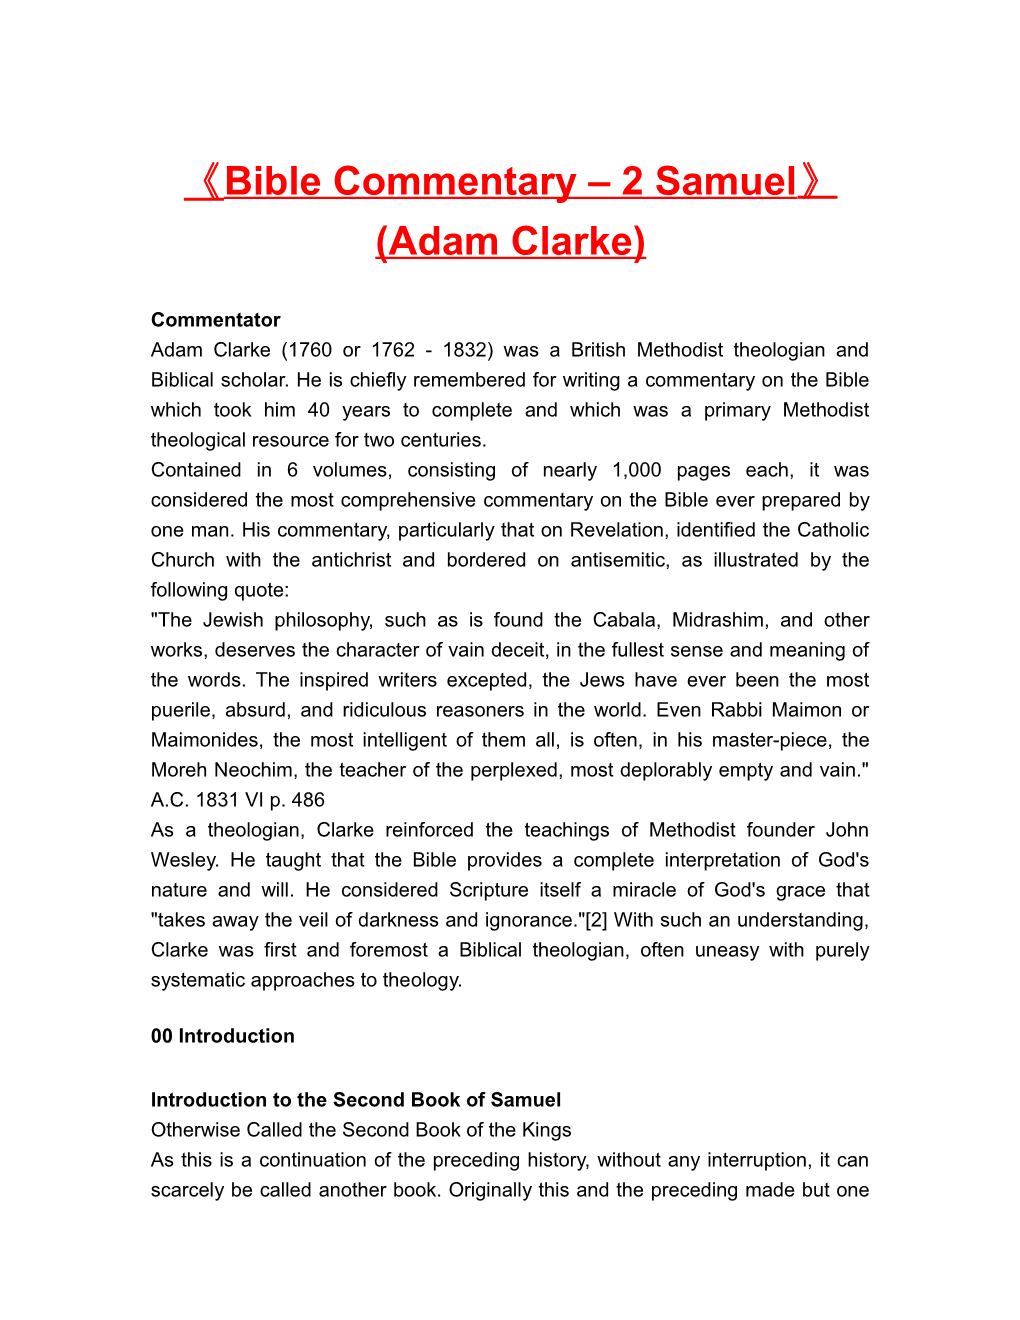 Bible Commentary 2 Samuel (Adam Clarke)